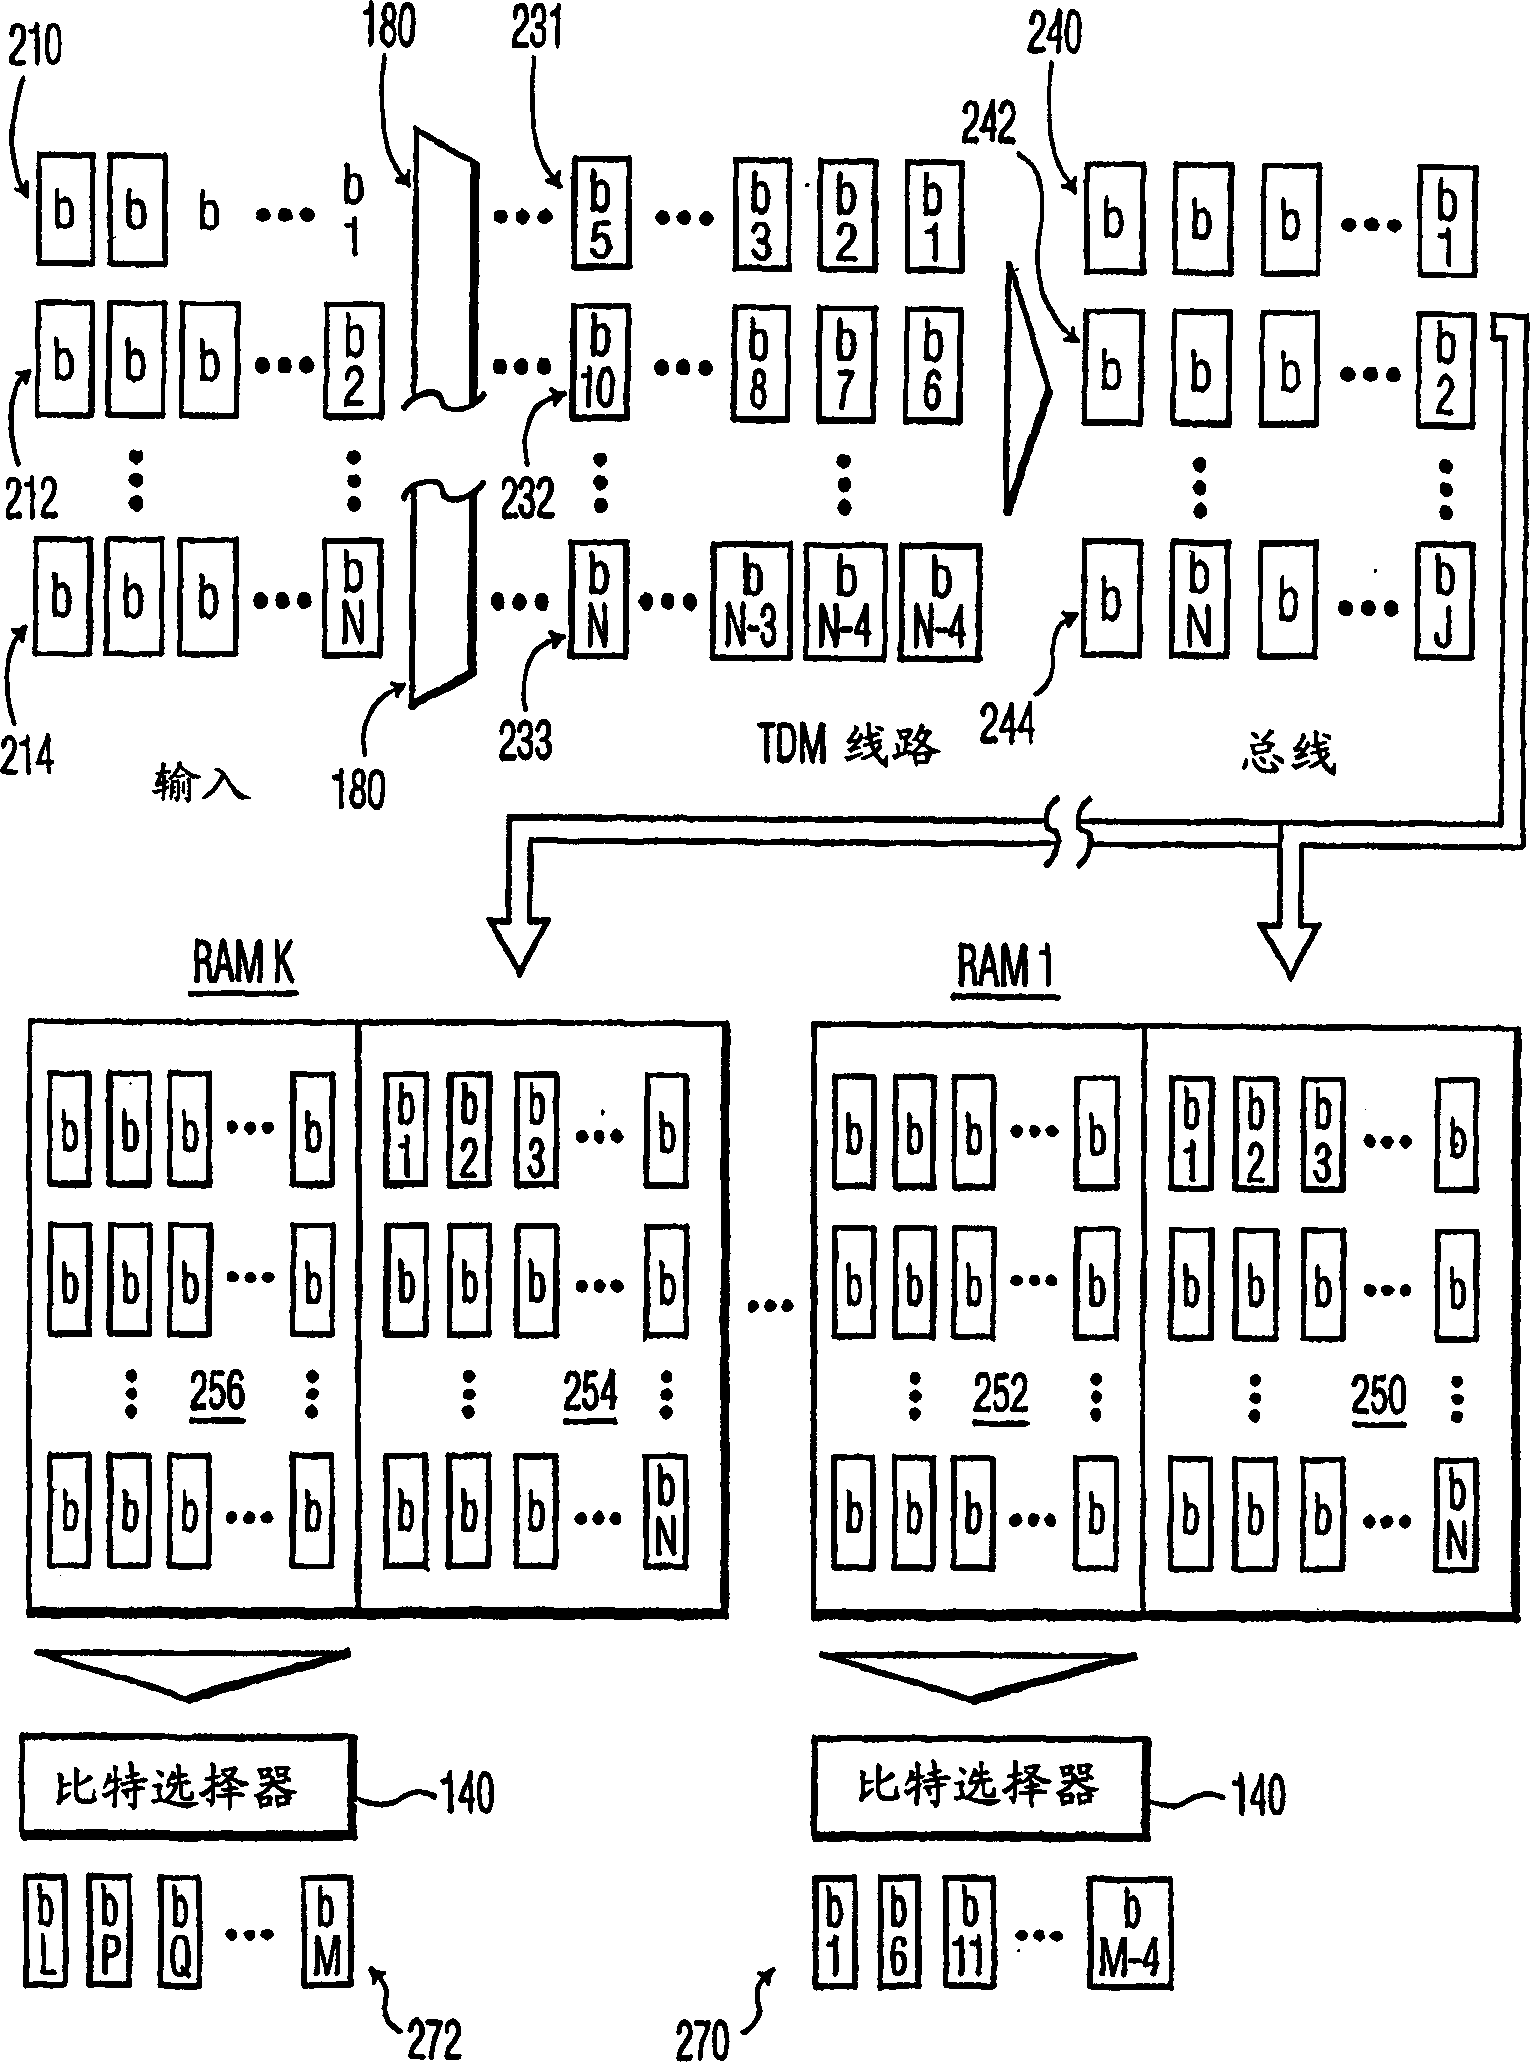 NxM switch using distributed RAM